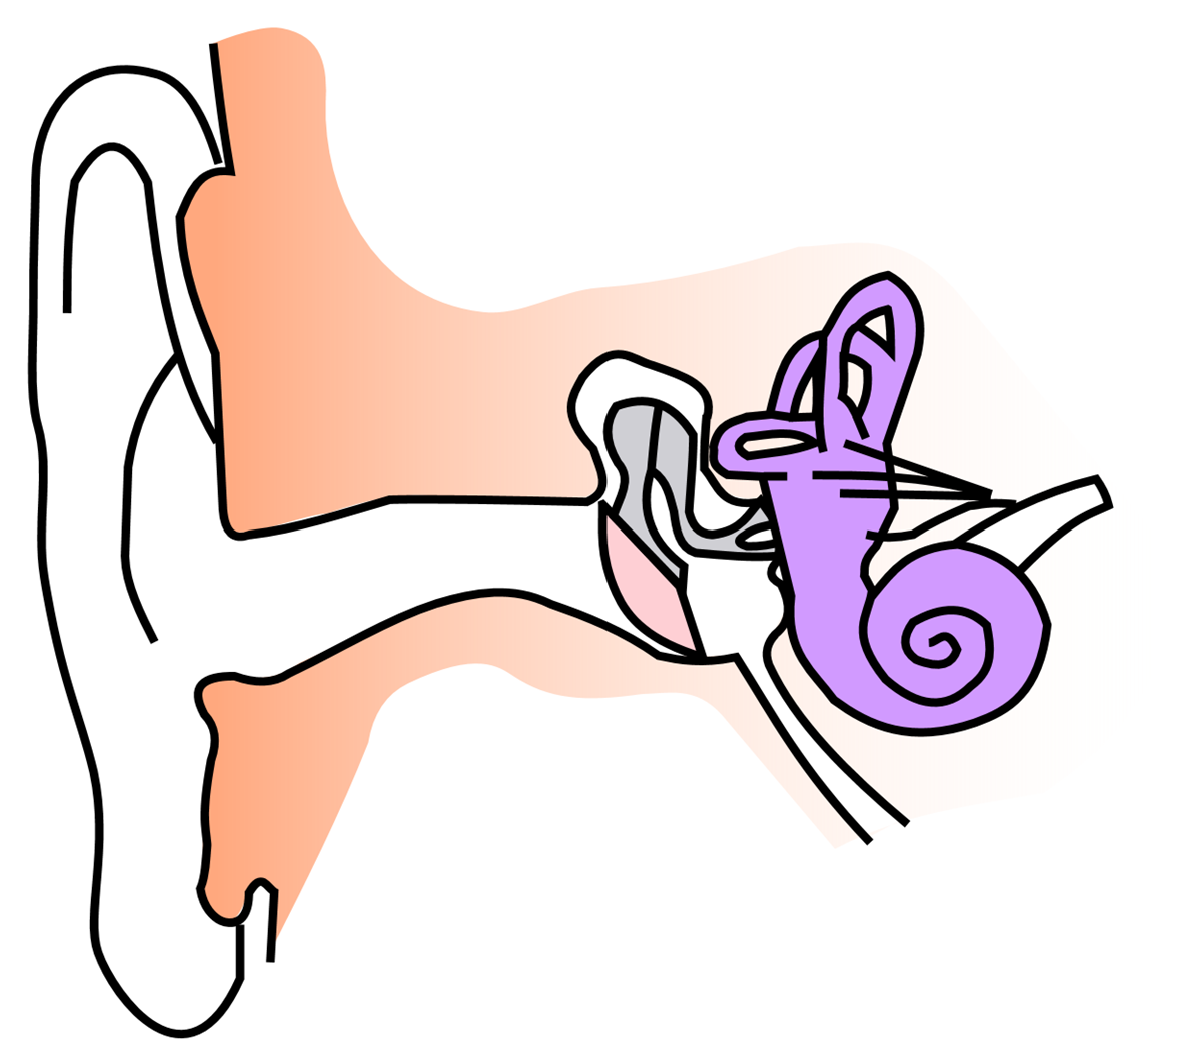 Diagram of ear for labeling